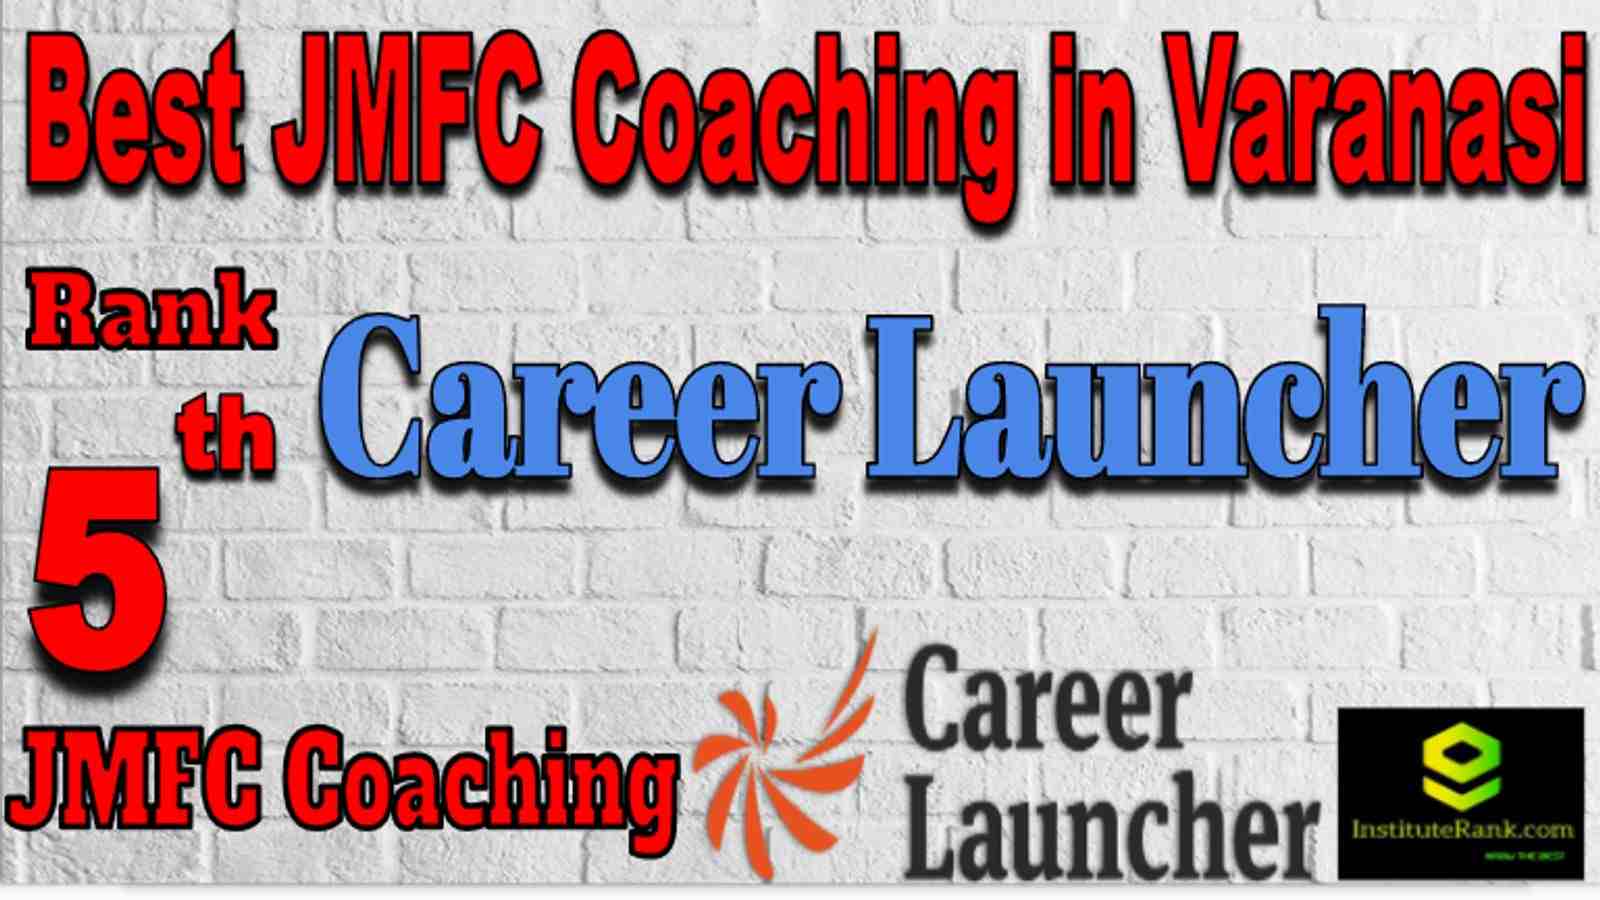 Rank 5 Best JMFC Coaching in Varanasi